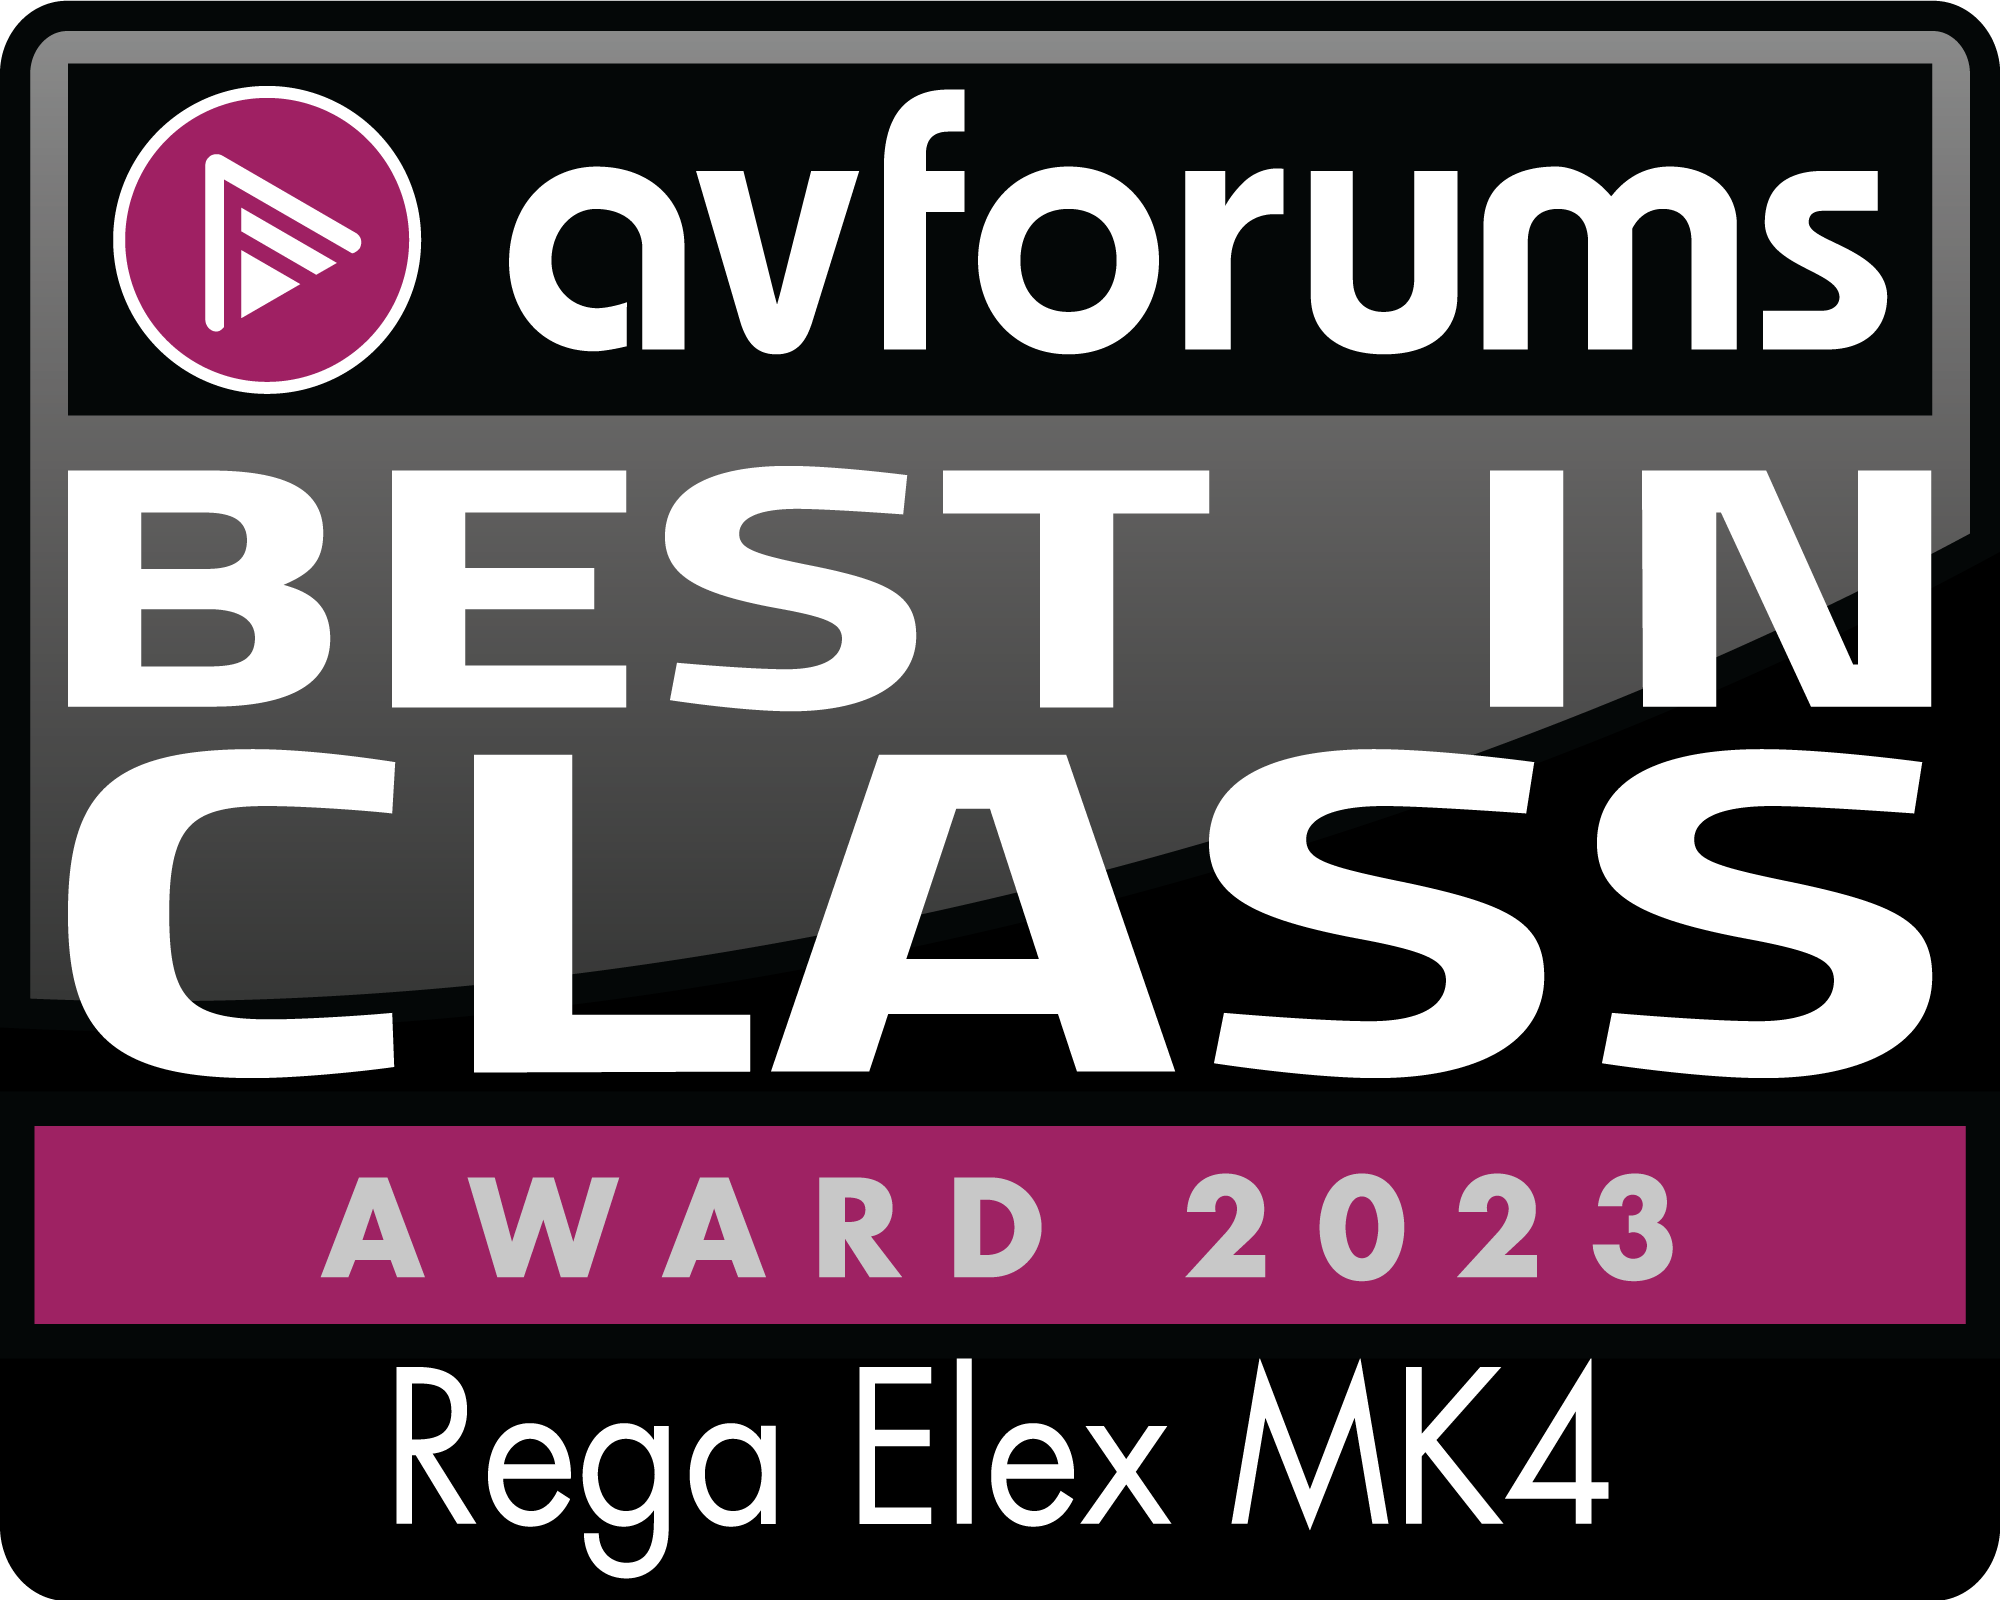 Rega Elex Mk4 - AVForums best in class